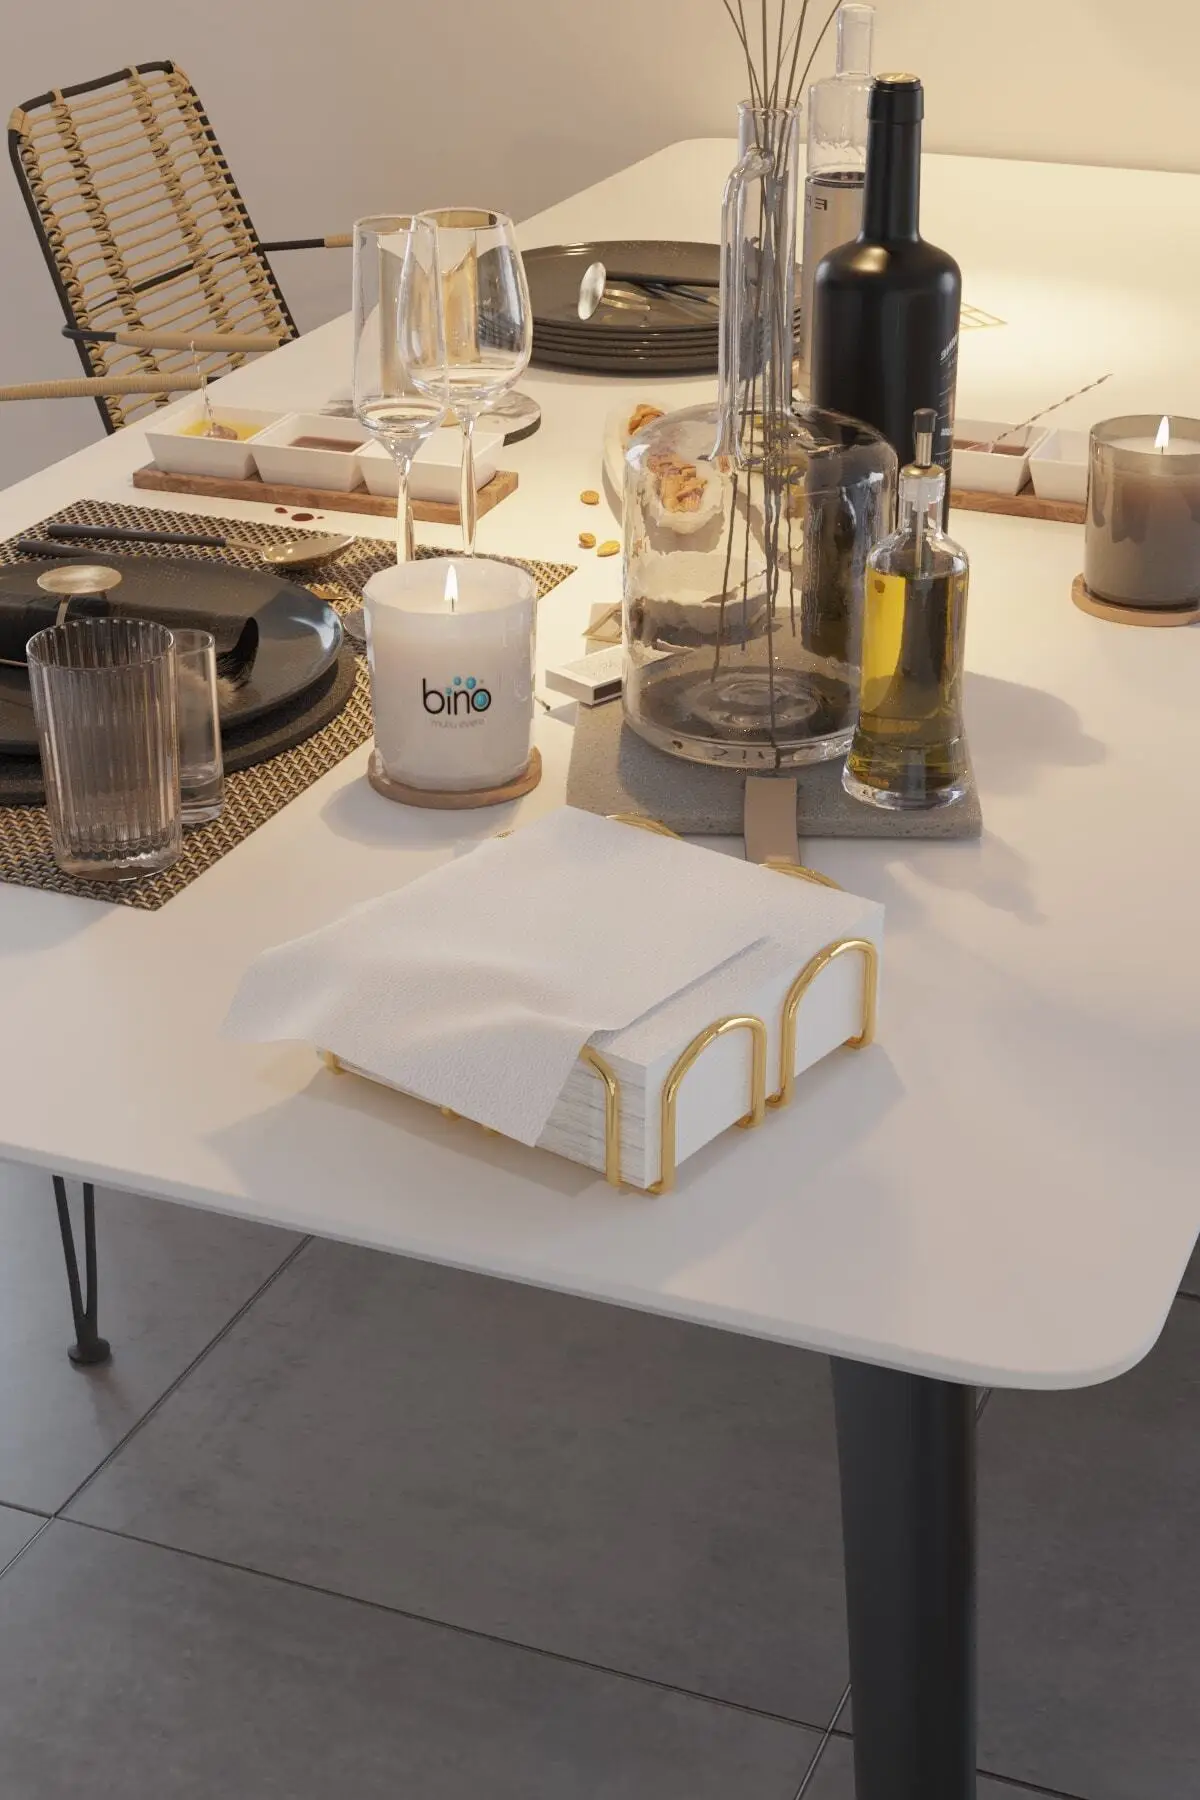 Bino Service Presentation Set Towel rack Napkin Holder Trivet Gold Altın Full Bright Stainless Steel 3 PCs Kitchen images - 6